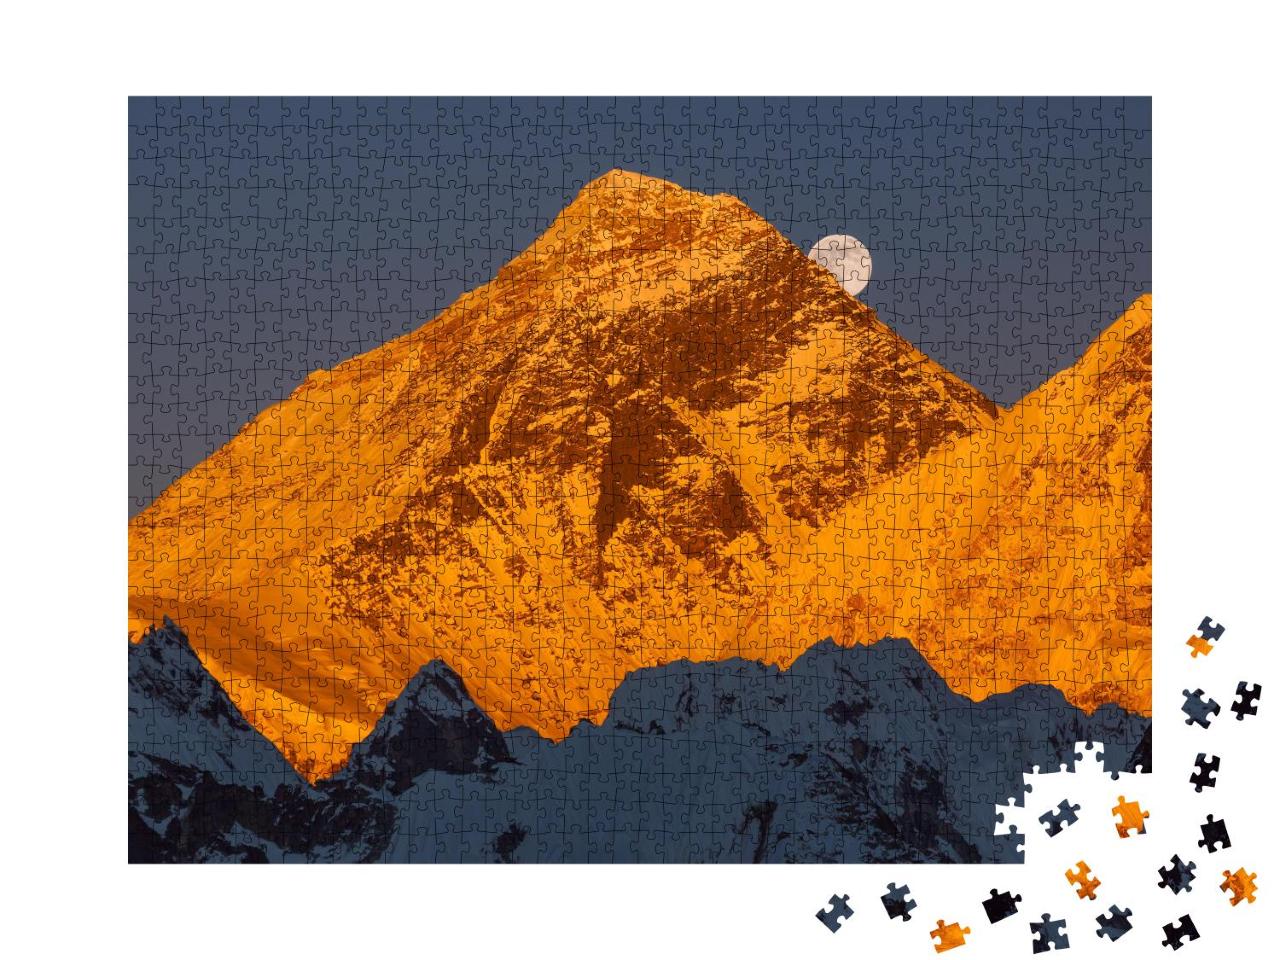 Puzzle 1000 Teile „Goldene Pyramide des Mount Everest bei Sonnenuntergang“